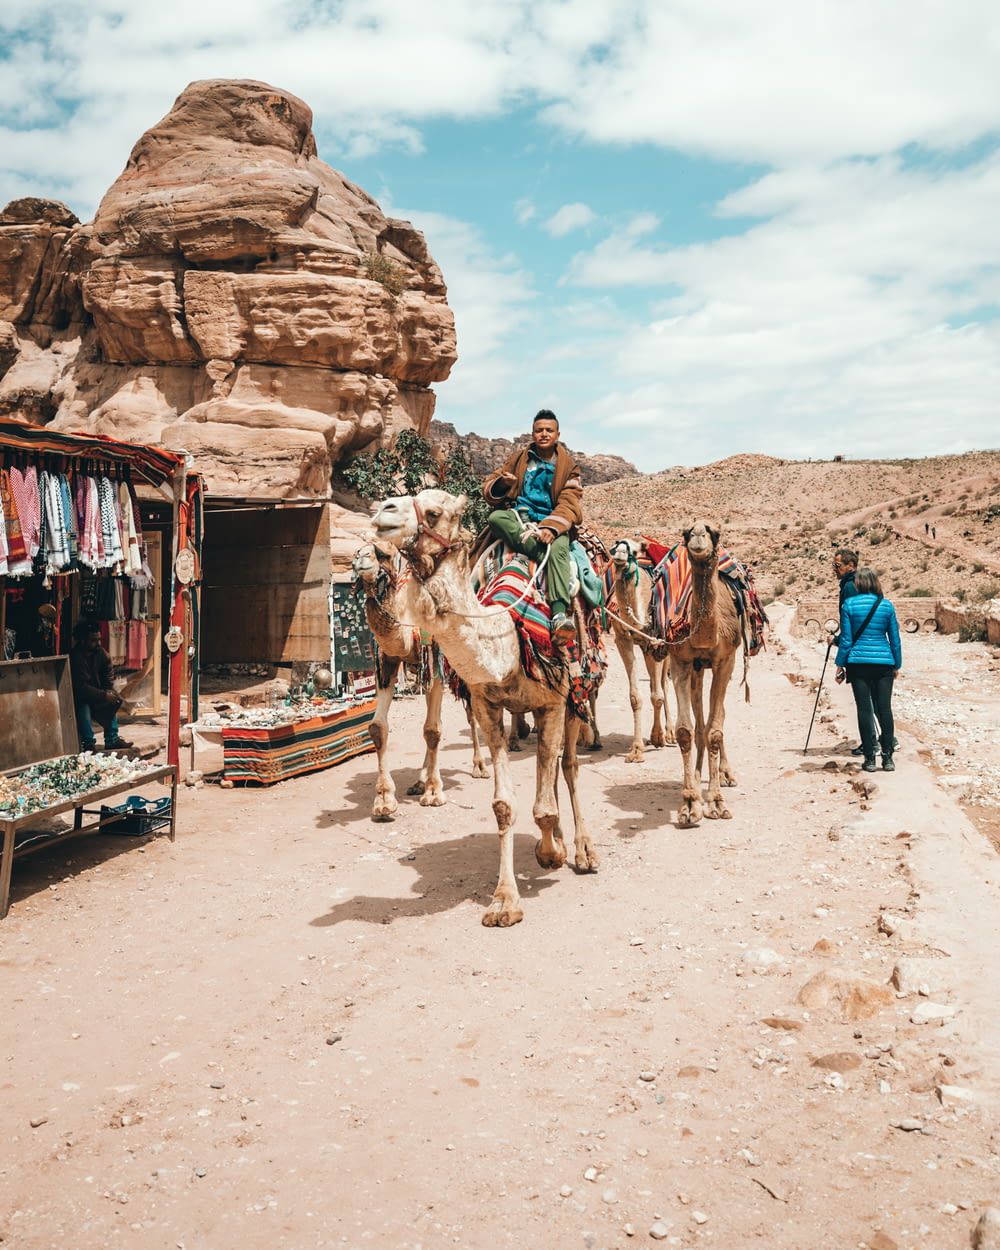 man riding camel near brown rock formation